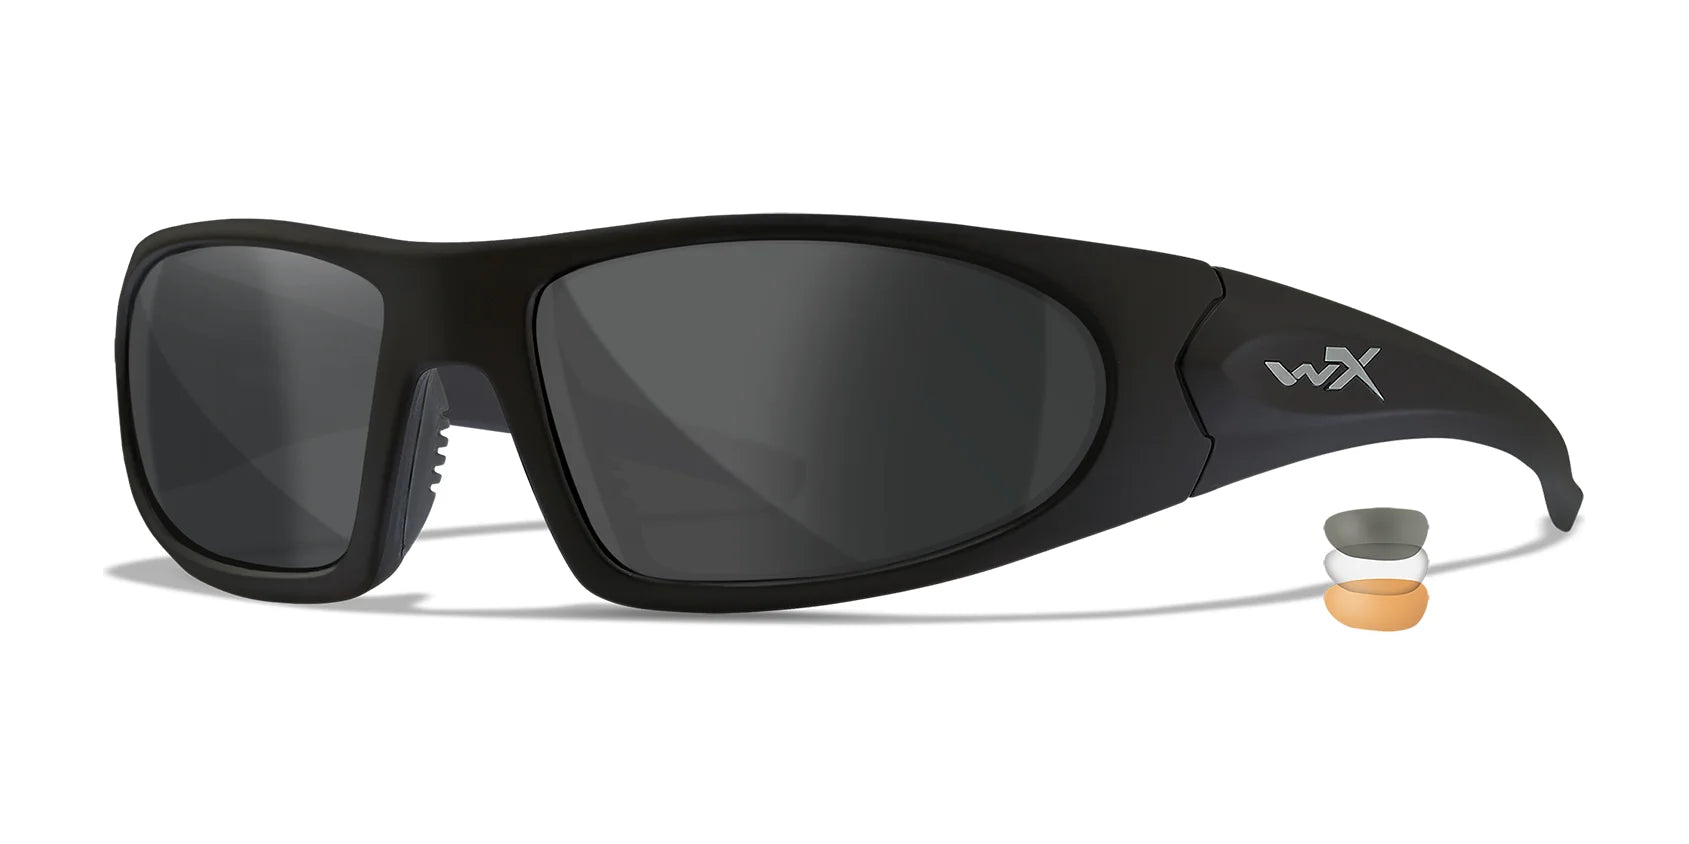 Wiley X ROMER 3 Safety Glasses Matte Black / Clear, Smoke Grey, Light Rust